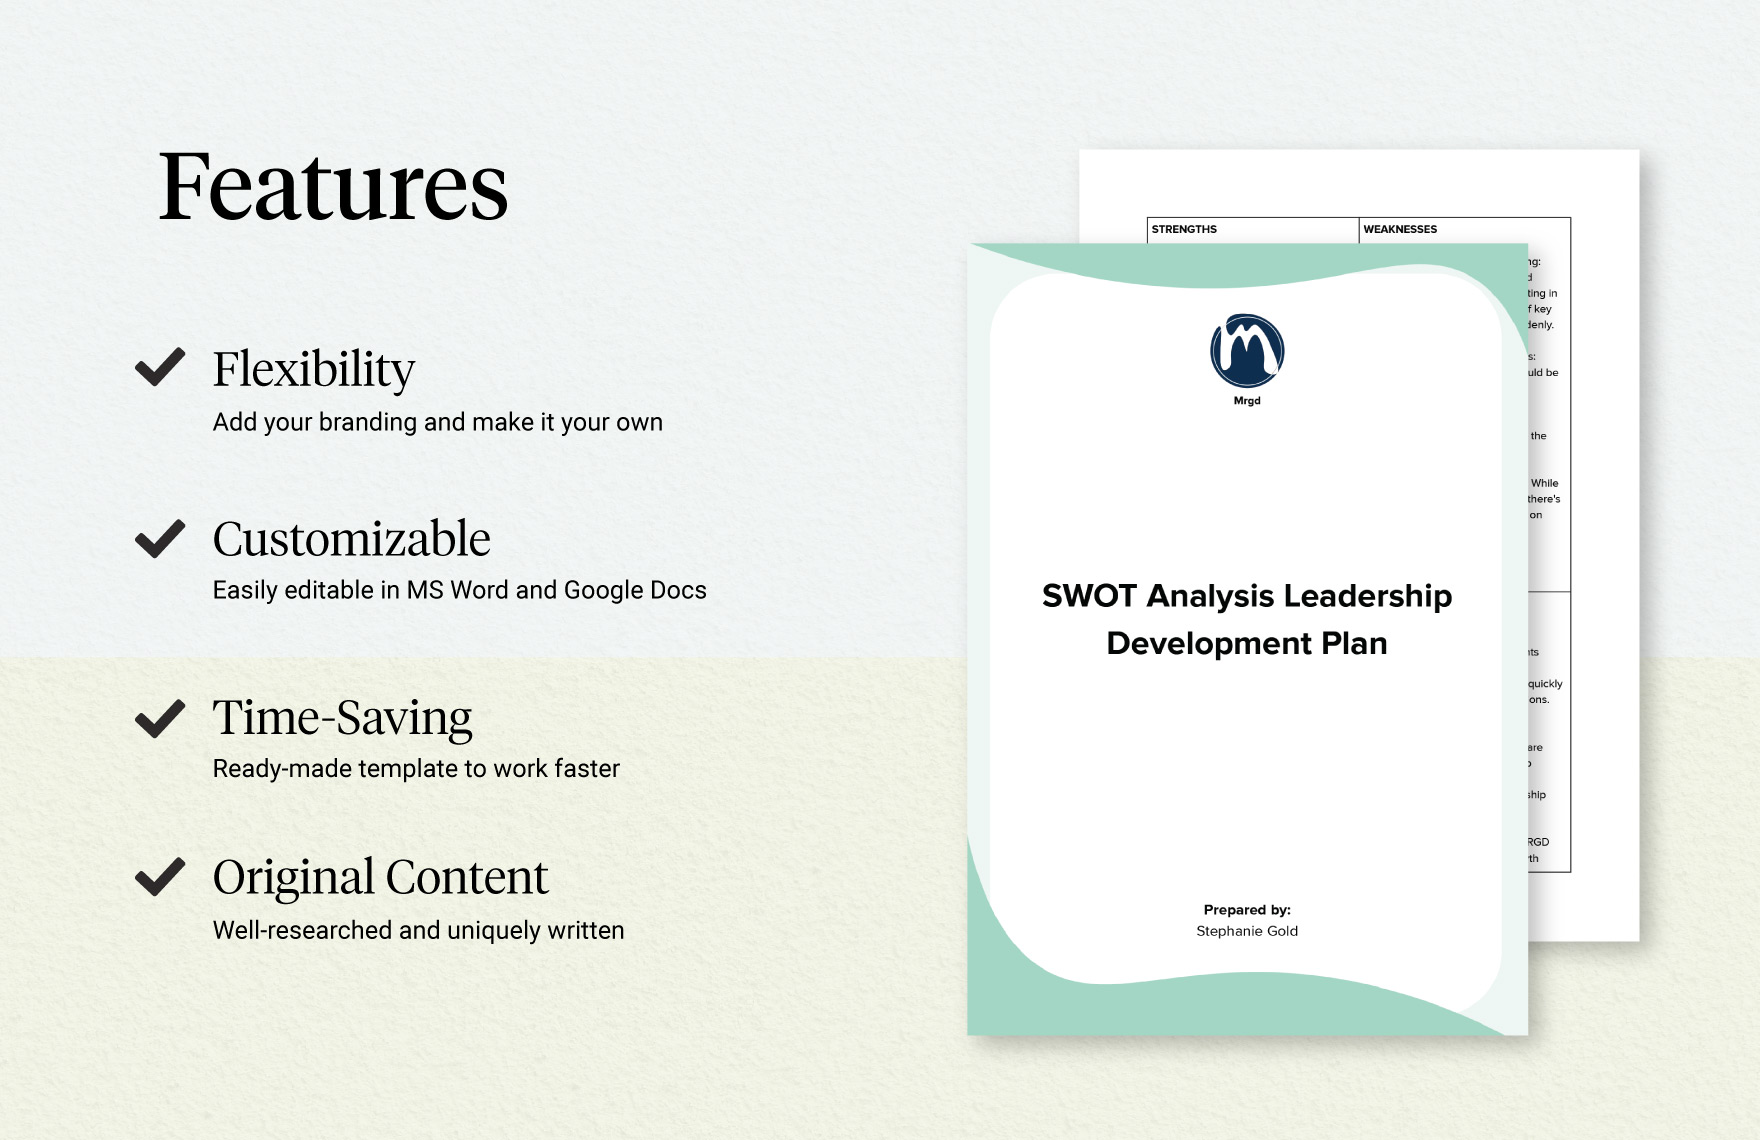 SWOT Analysis Leadership Development Plan Template